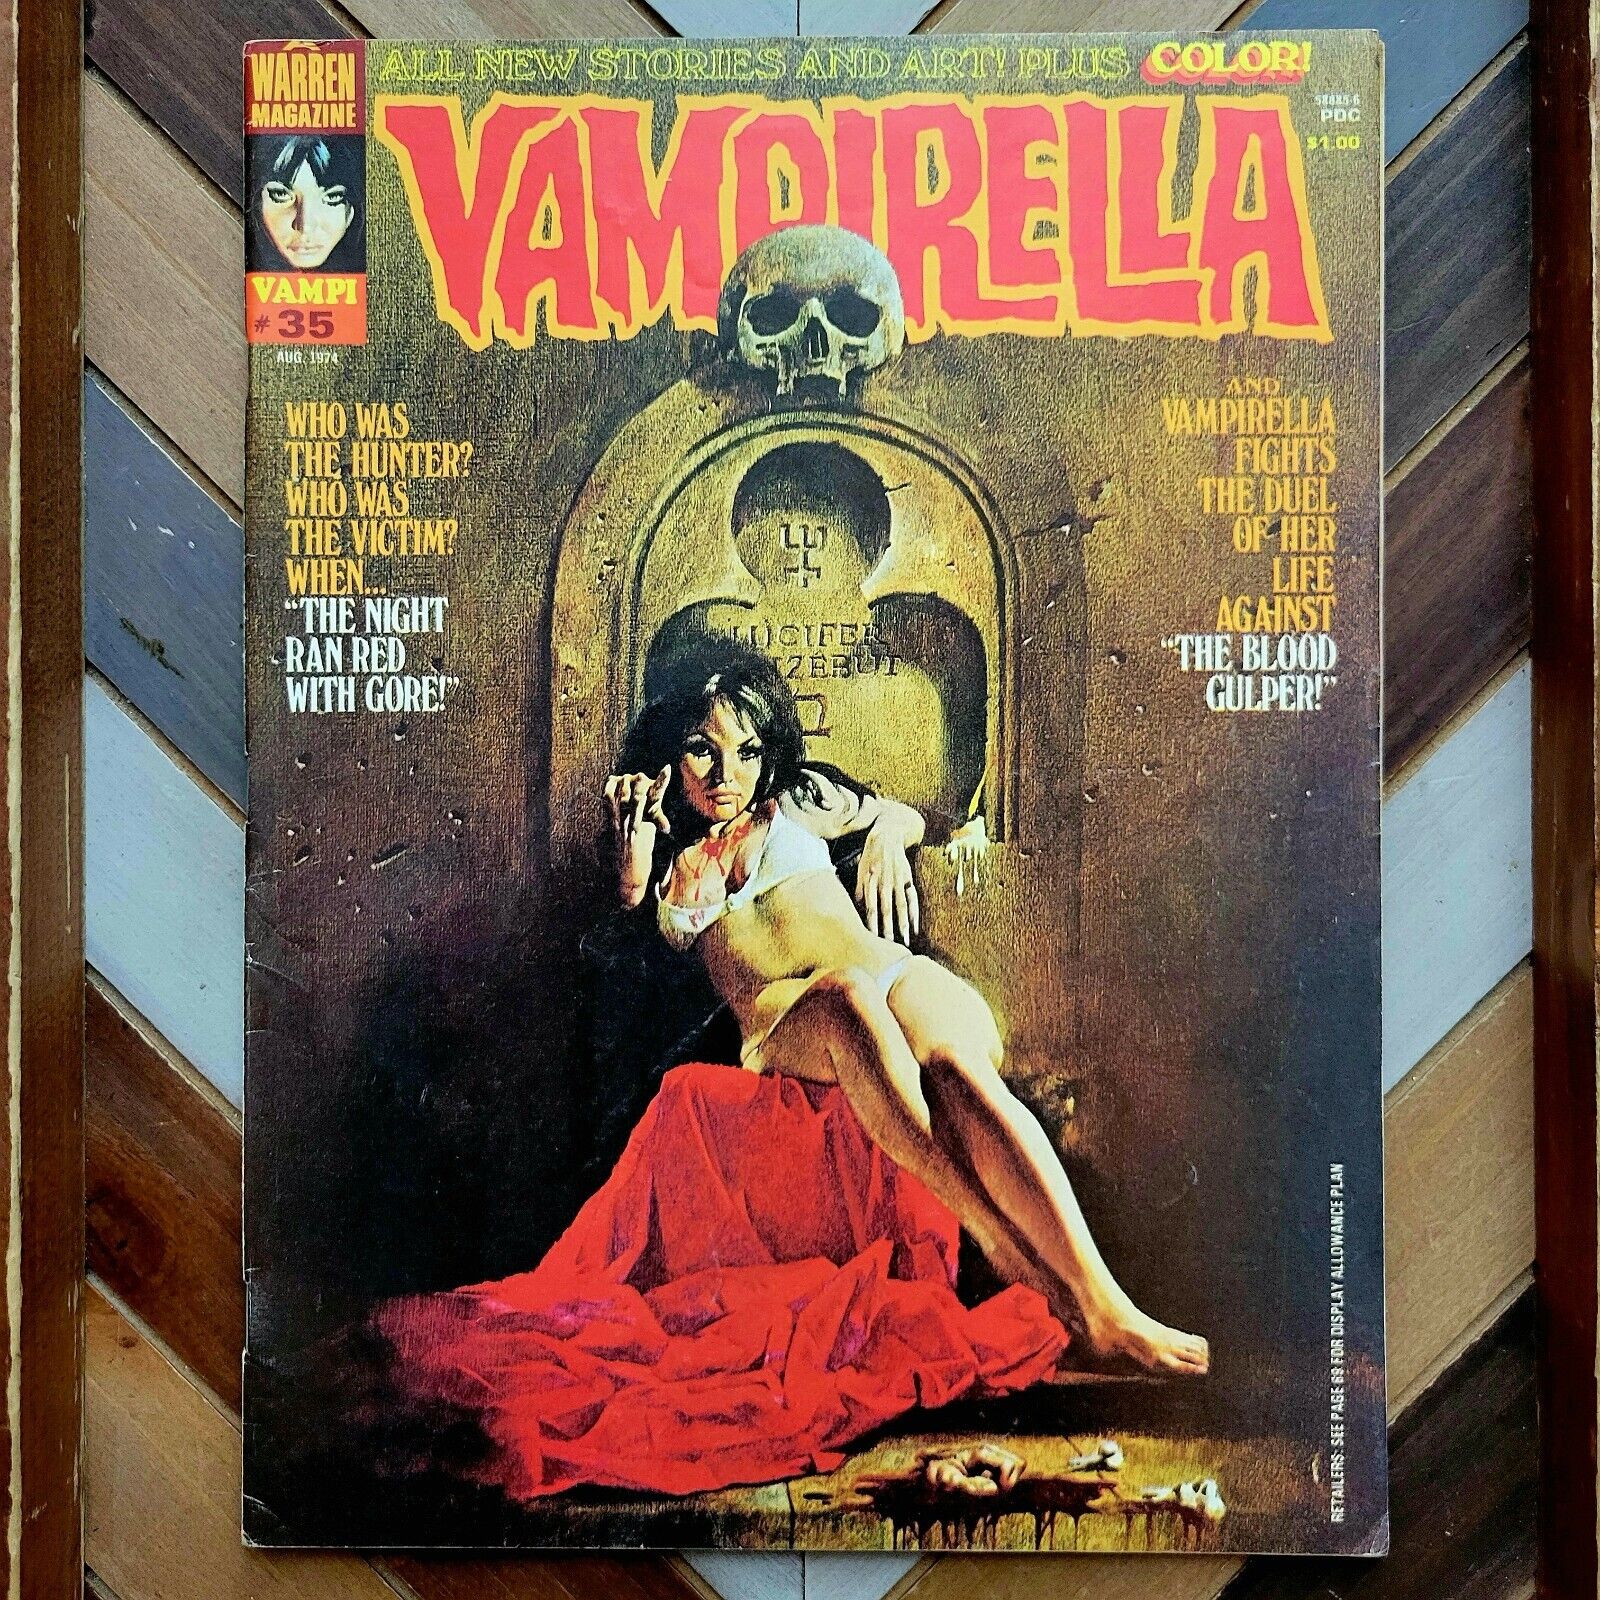 VAMPIRELLA #35 VG+ (Warren 1974) 1st Series AURALEON/MAROTO Enrich Torres Cover